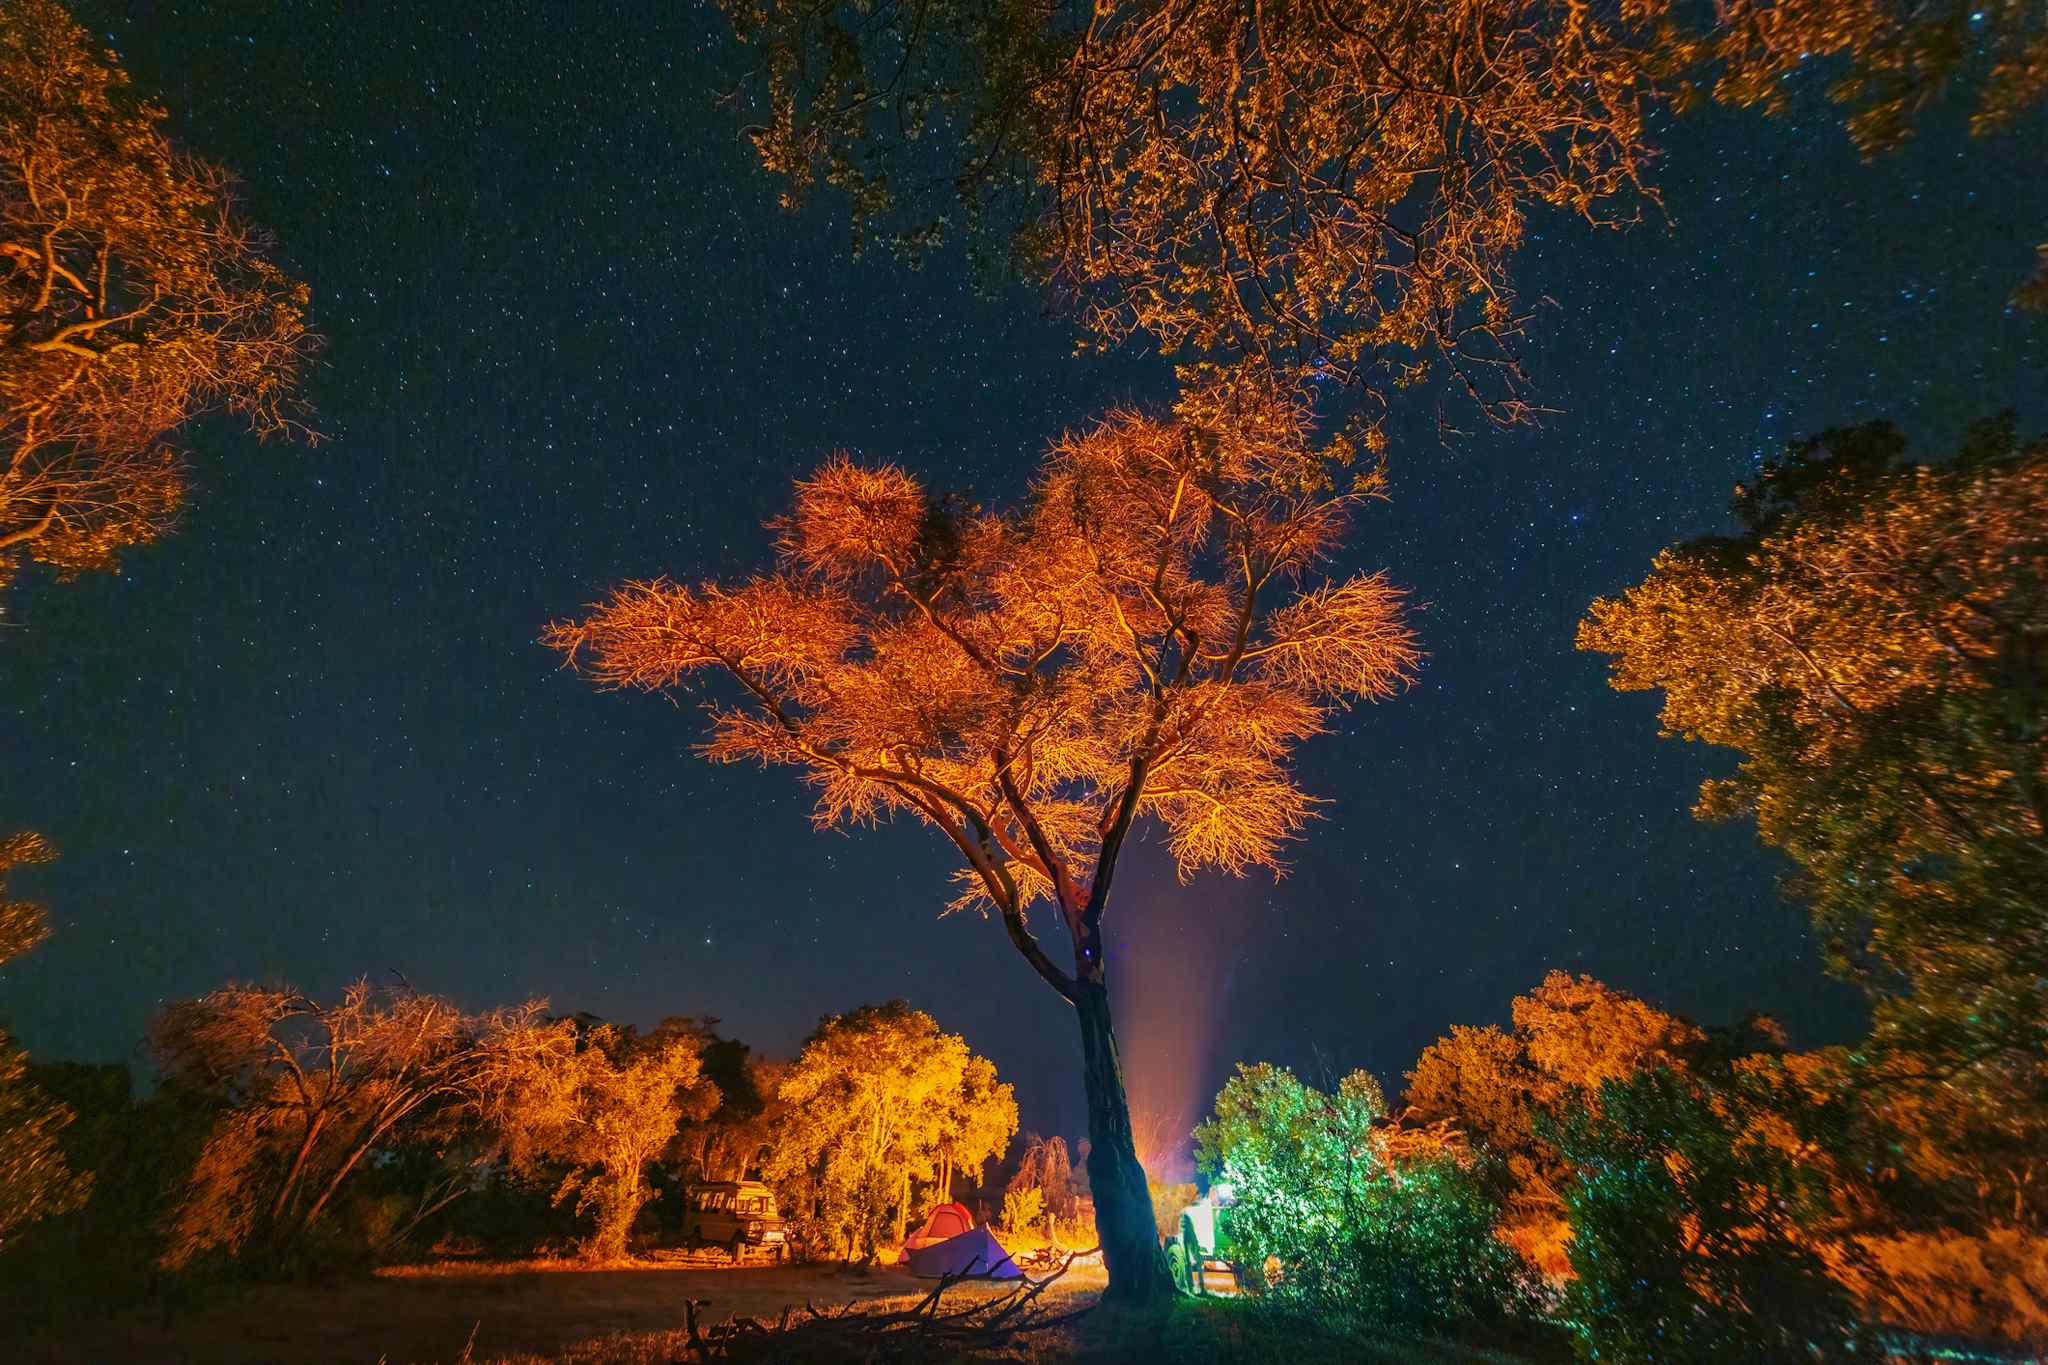 Wild camping at night in the African bush, Kenya